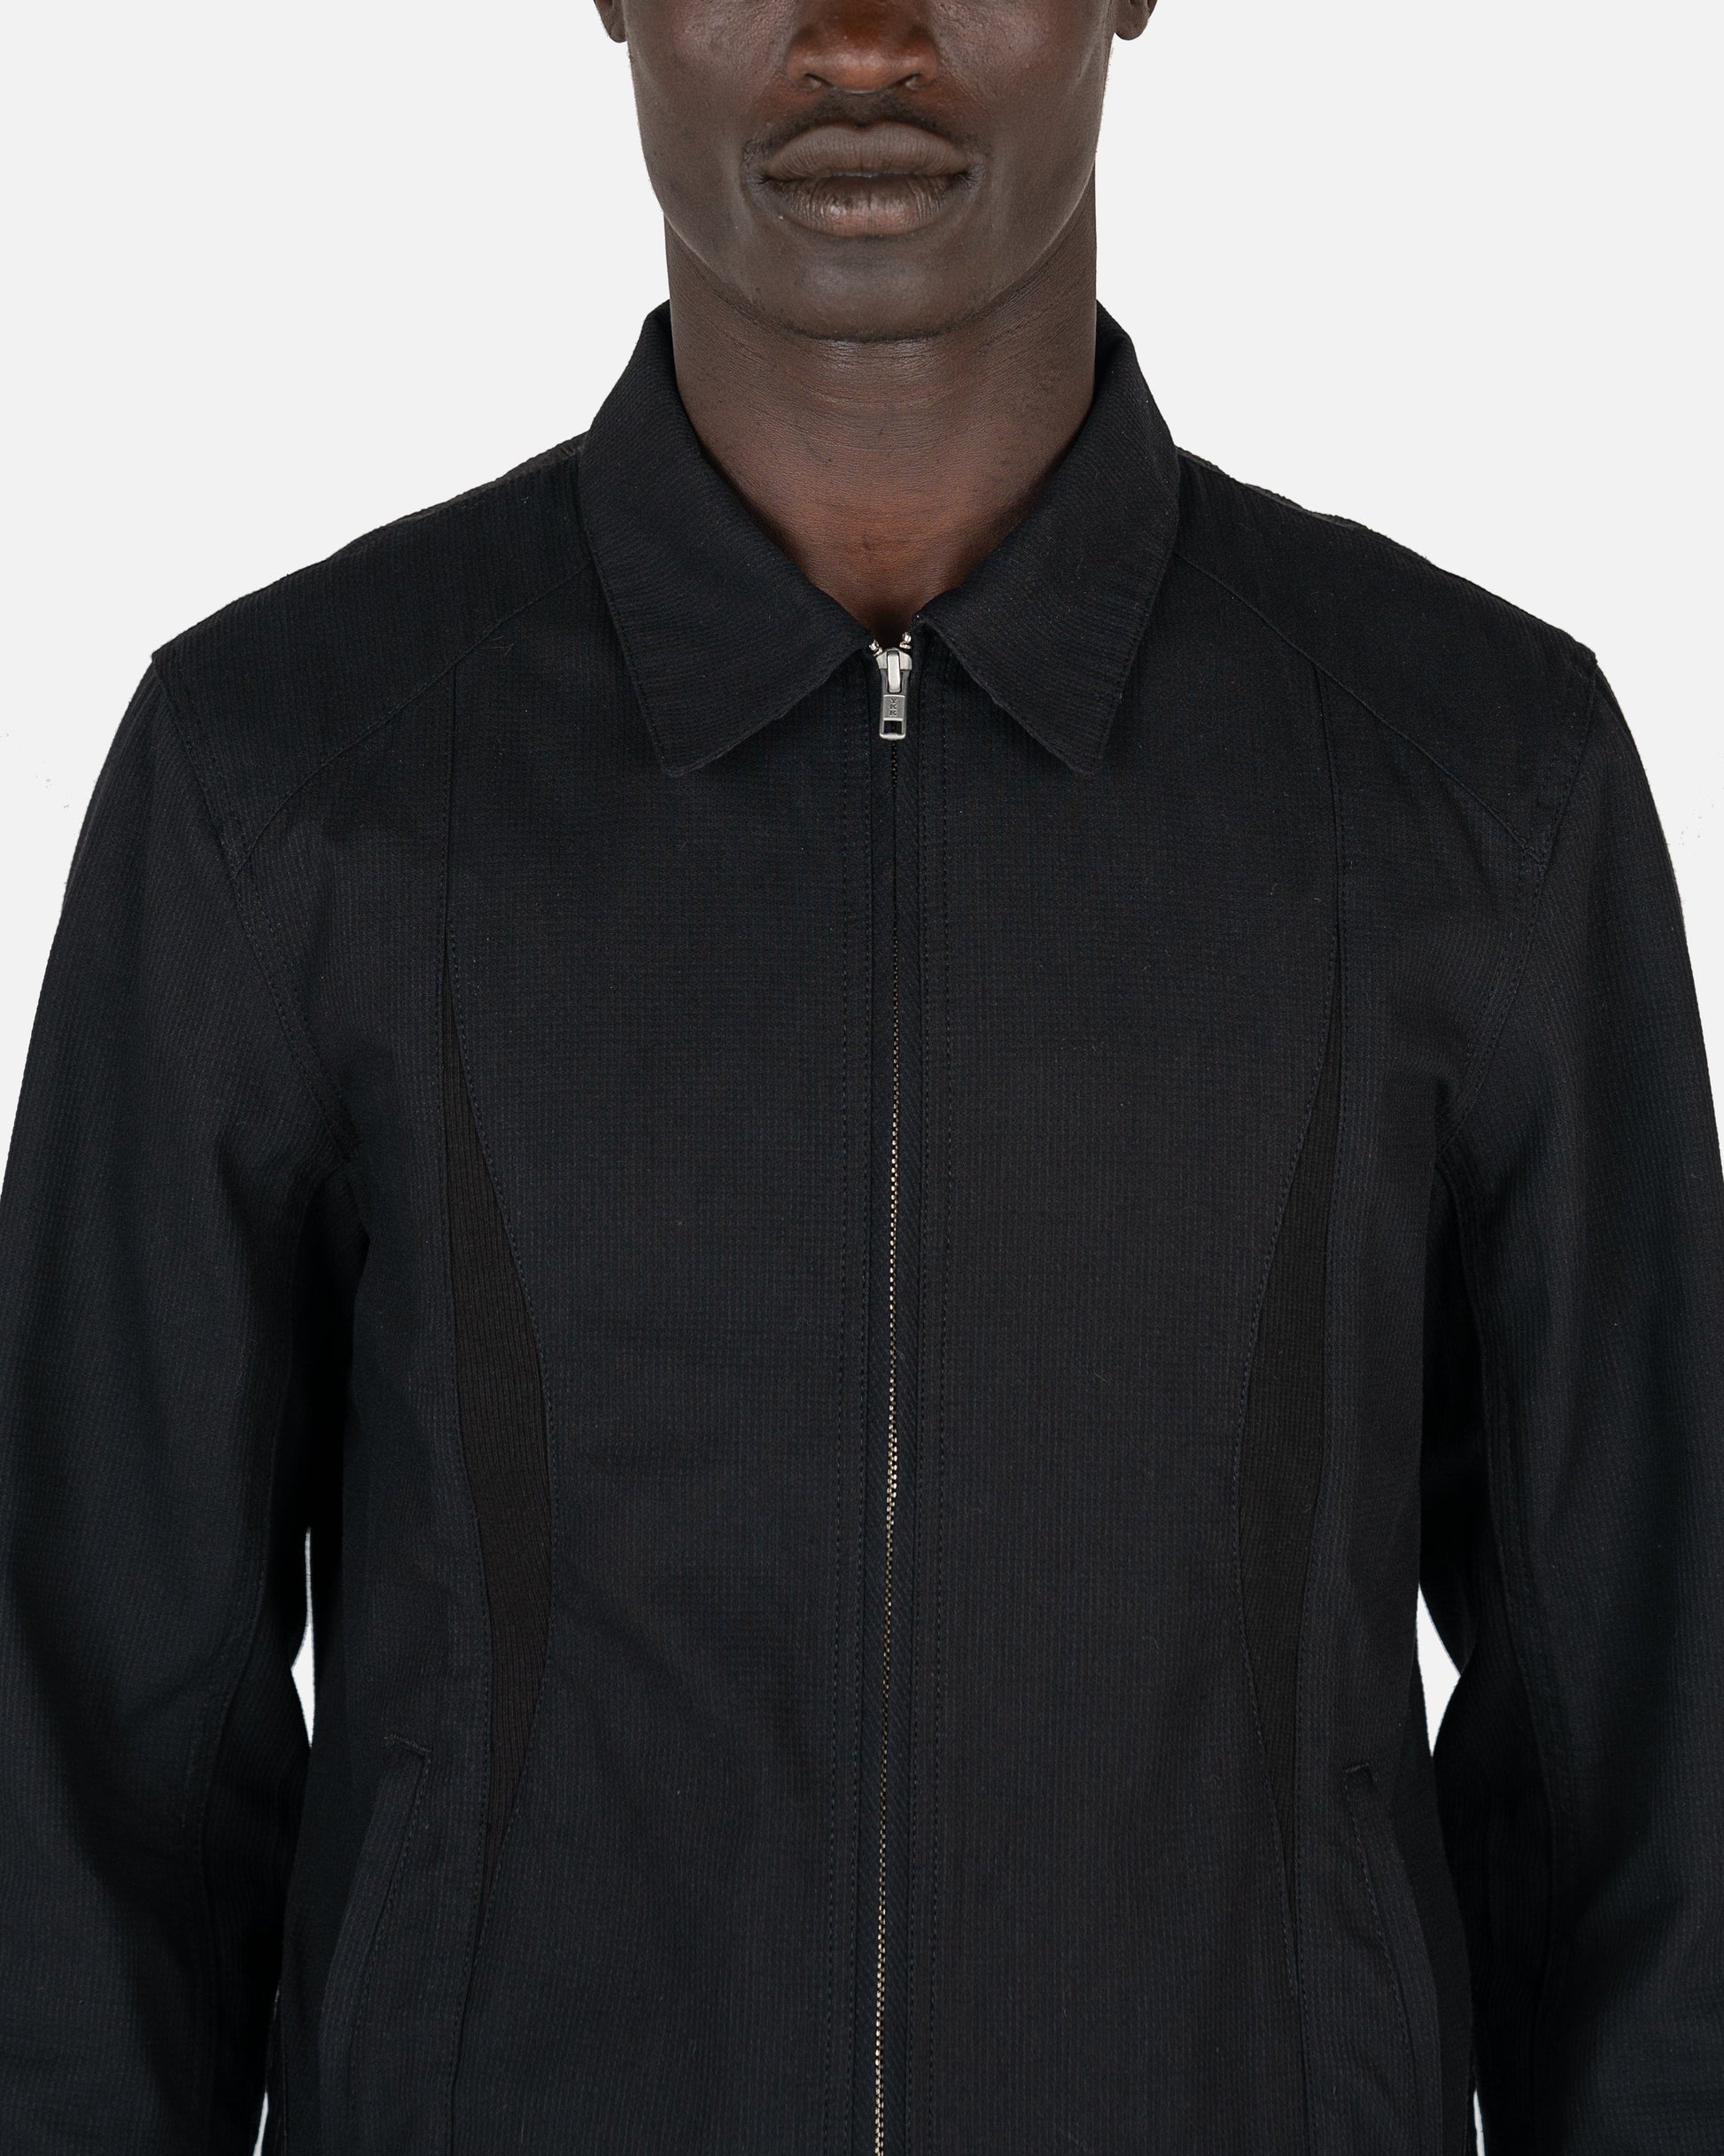 XLIM Men's Jackets Ep. 2 01 Jacket in Black